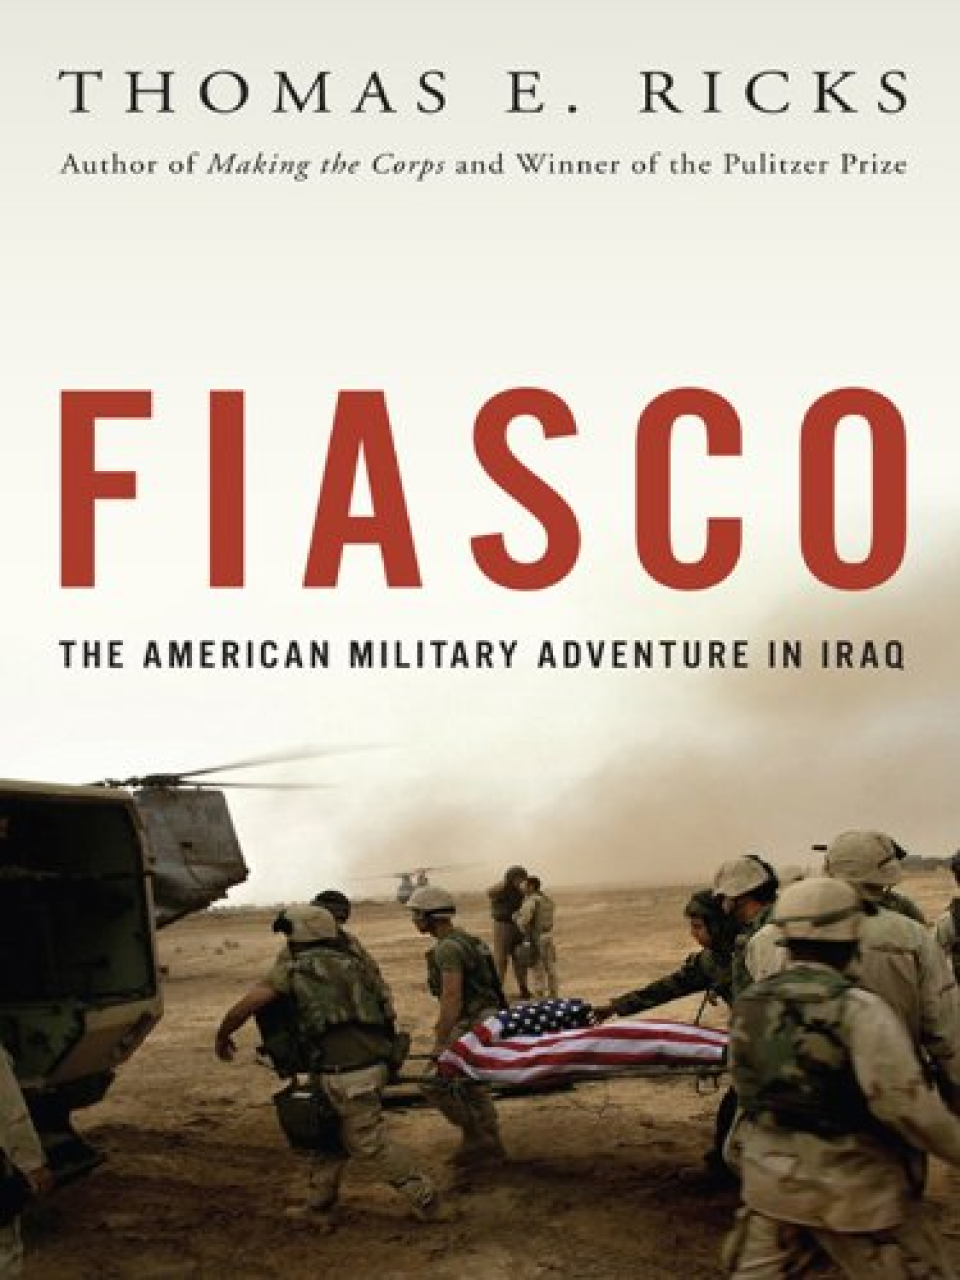 Fiasco: The American Military Adventure in Iraq, 2003 to 2005